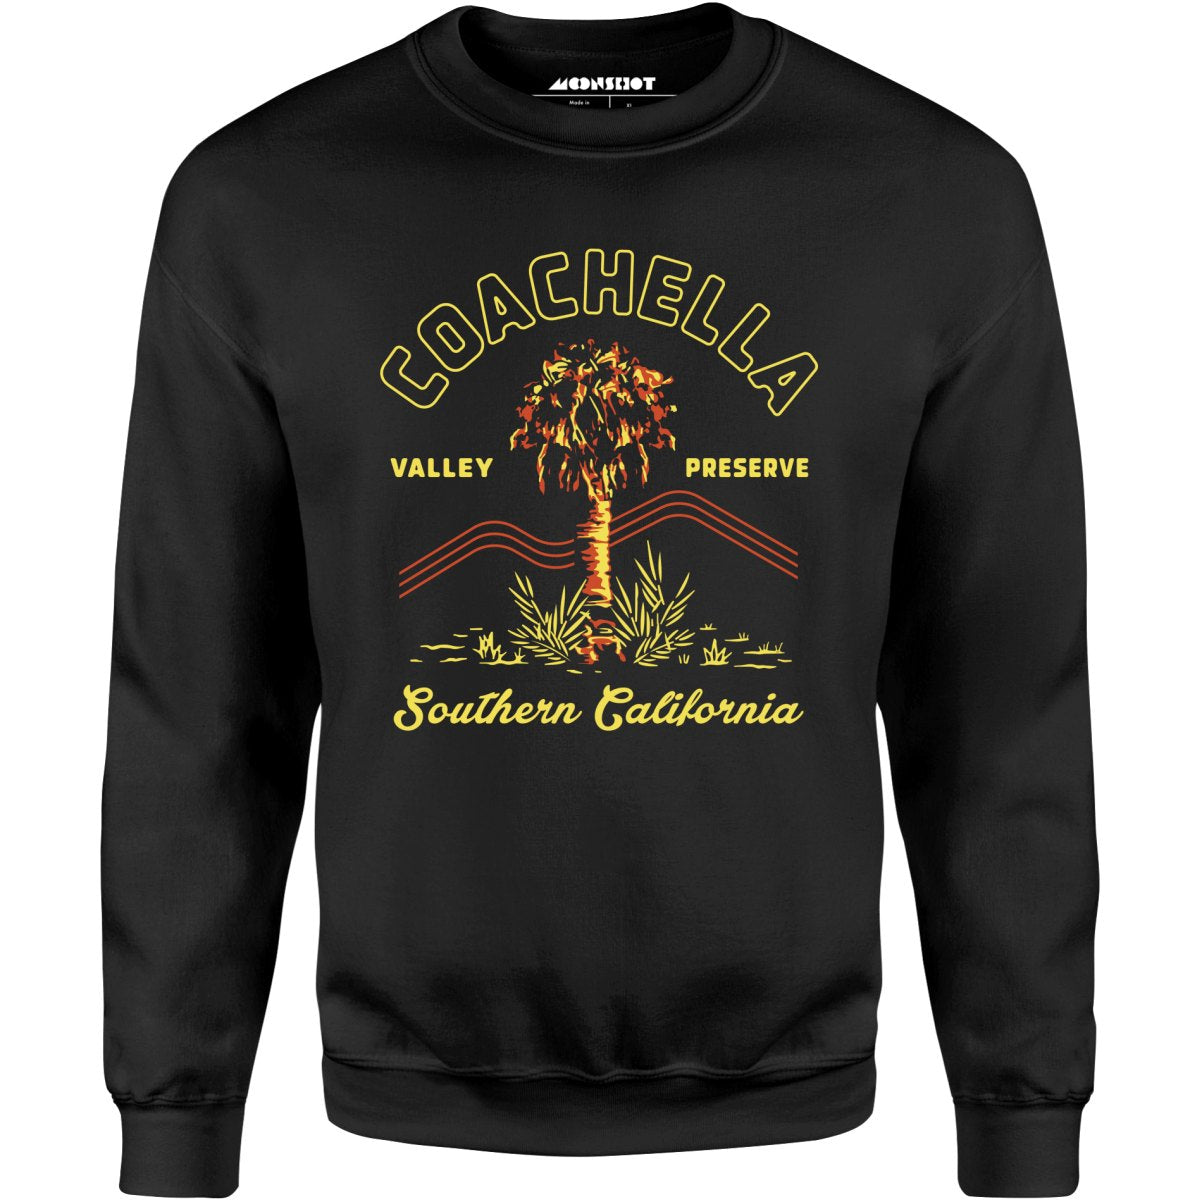 Coachella Valley Preserve - Southern California - Unisex Sweatshirt